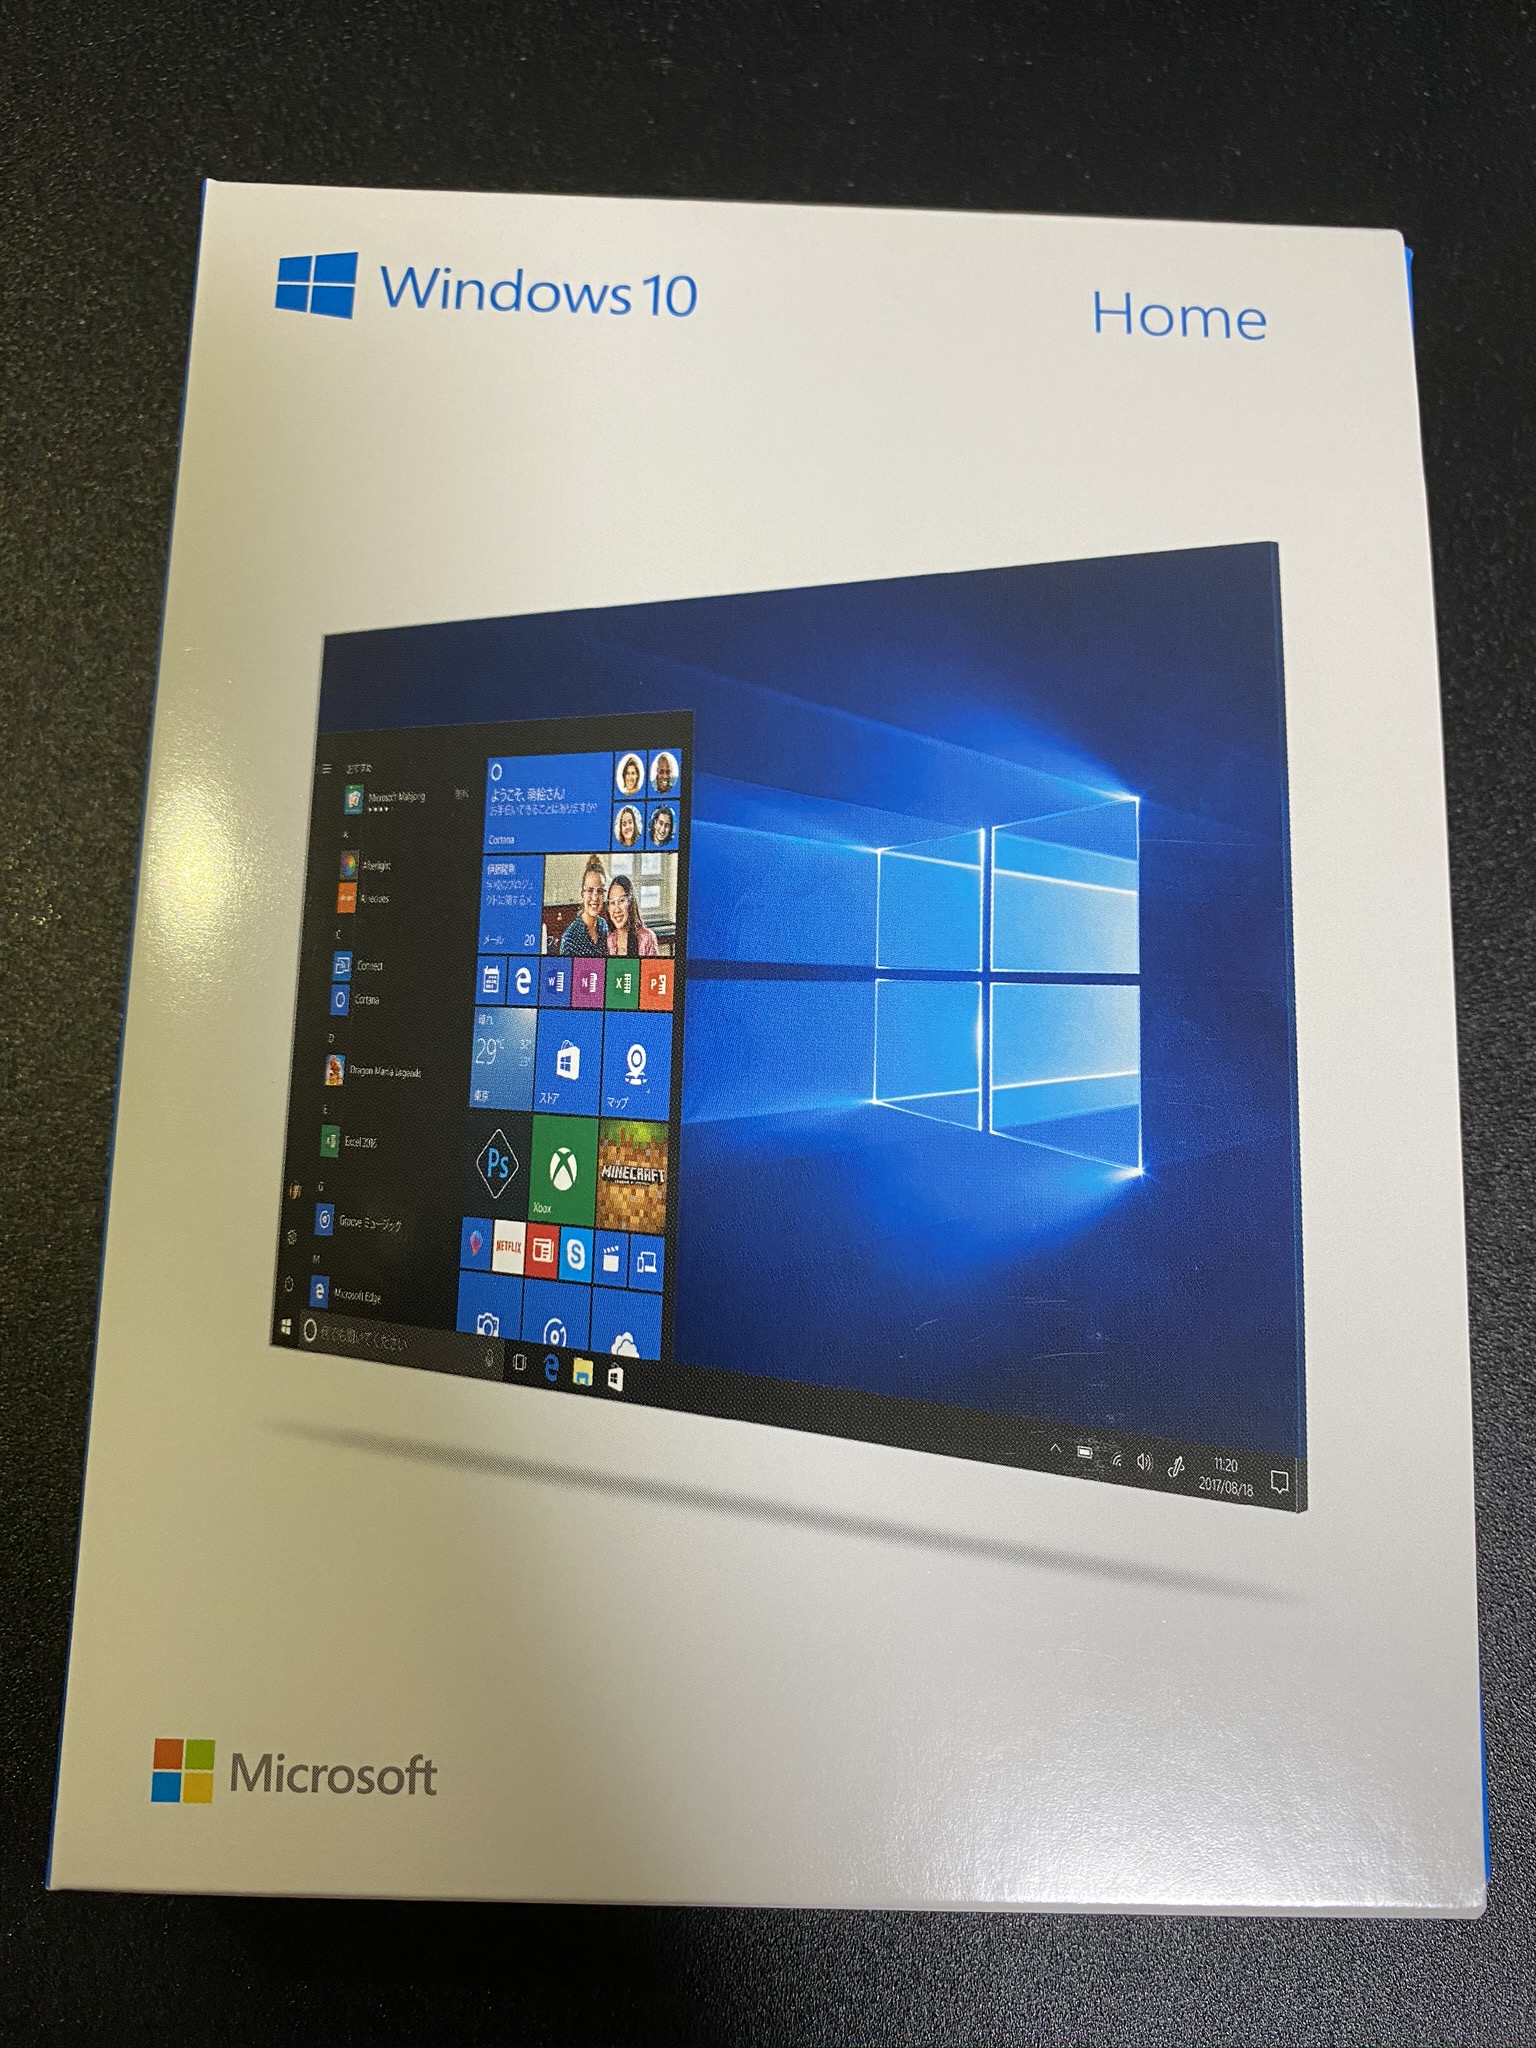 Windows10 Home パッケージ版 - PC周辺機器